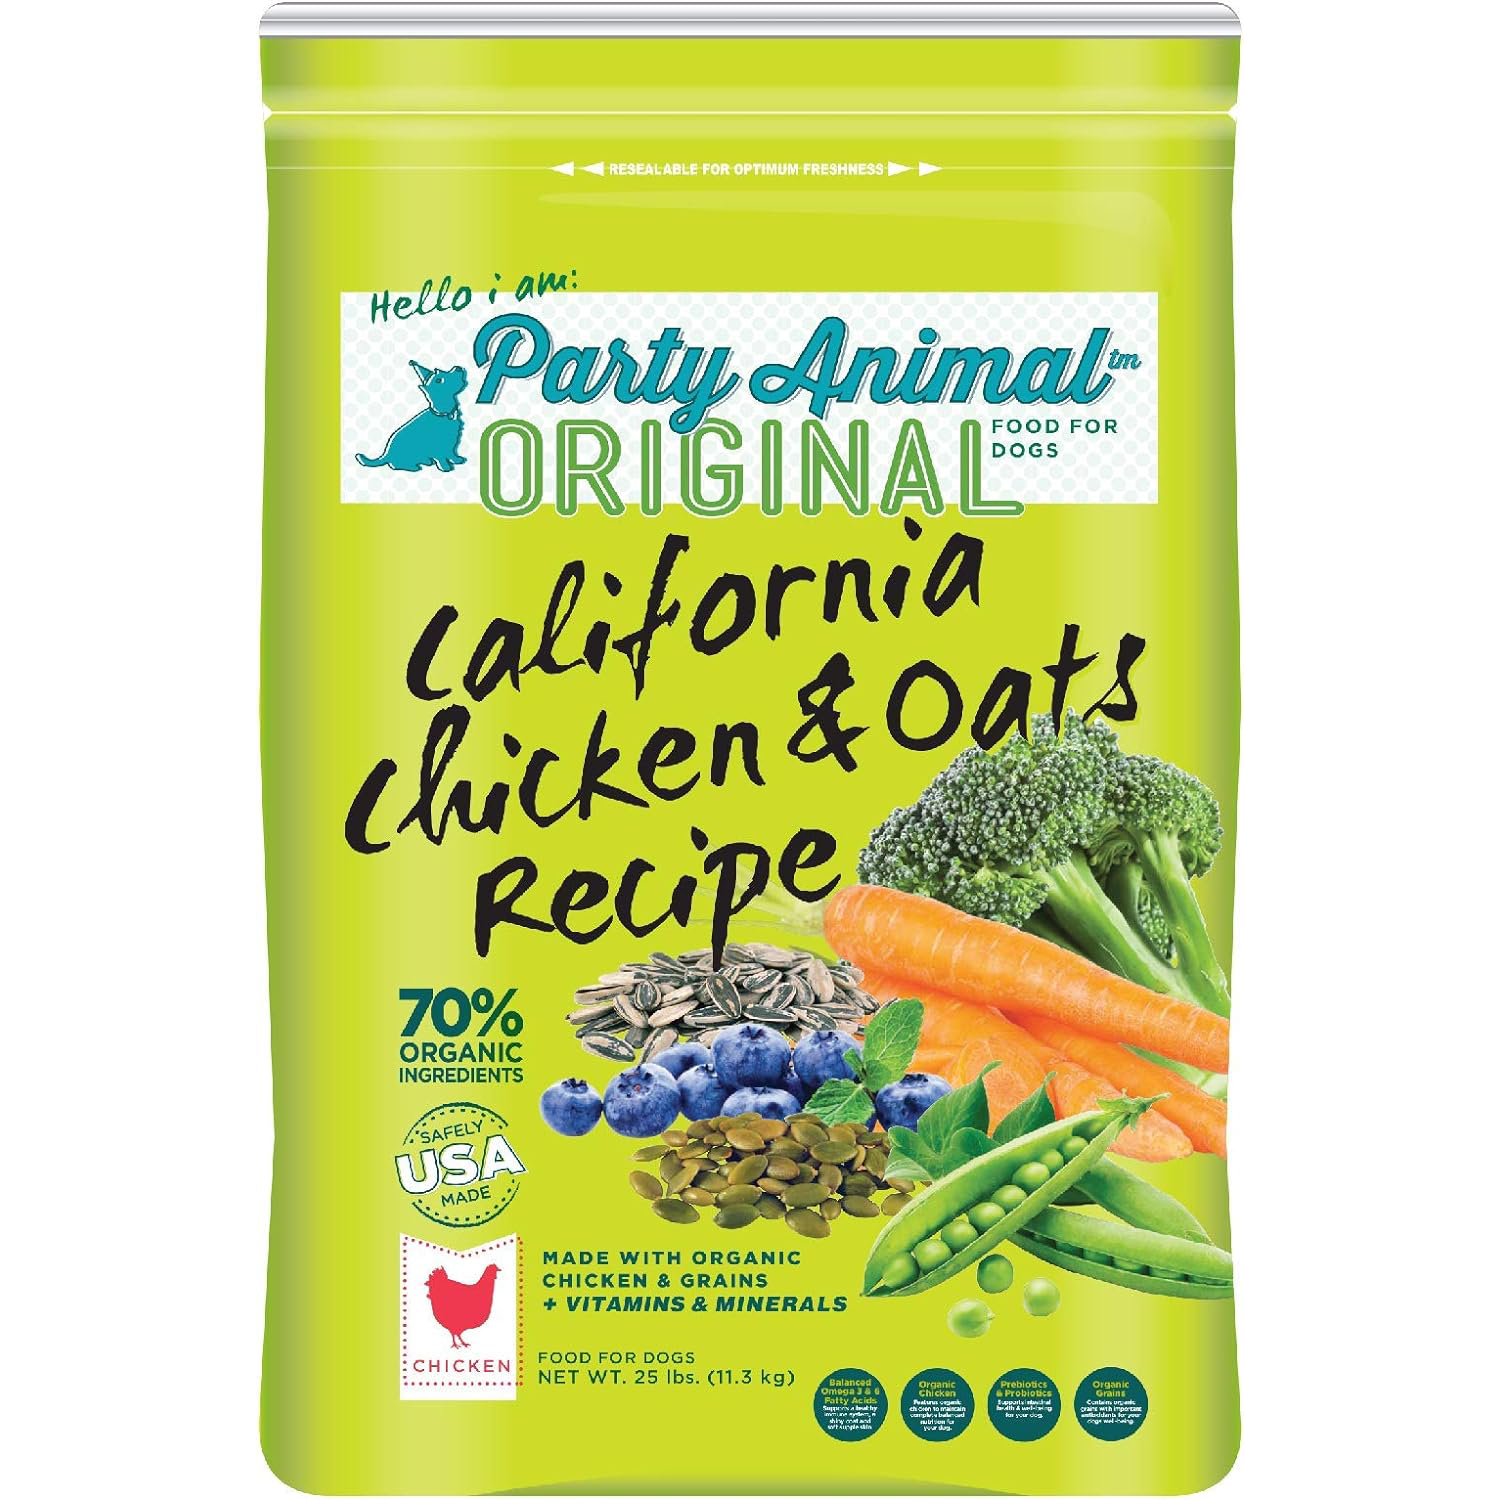 California Chicken & Oats Recipe Dry Dog Food